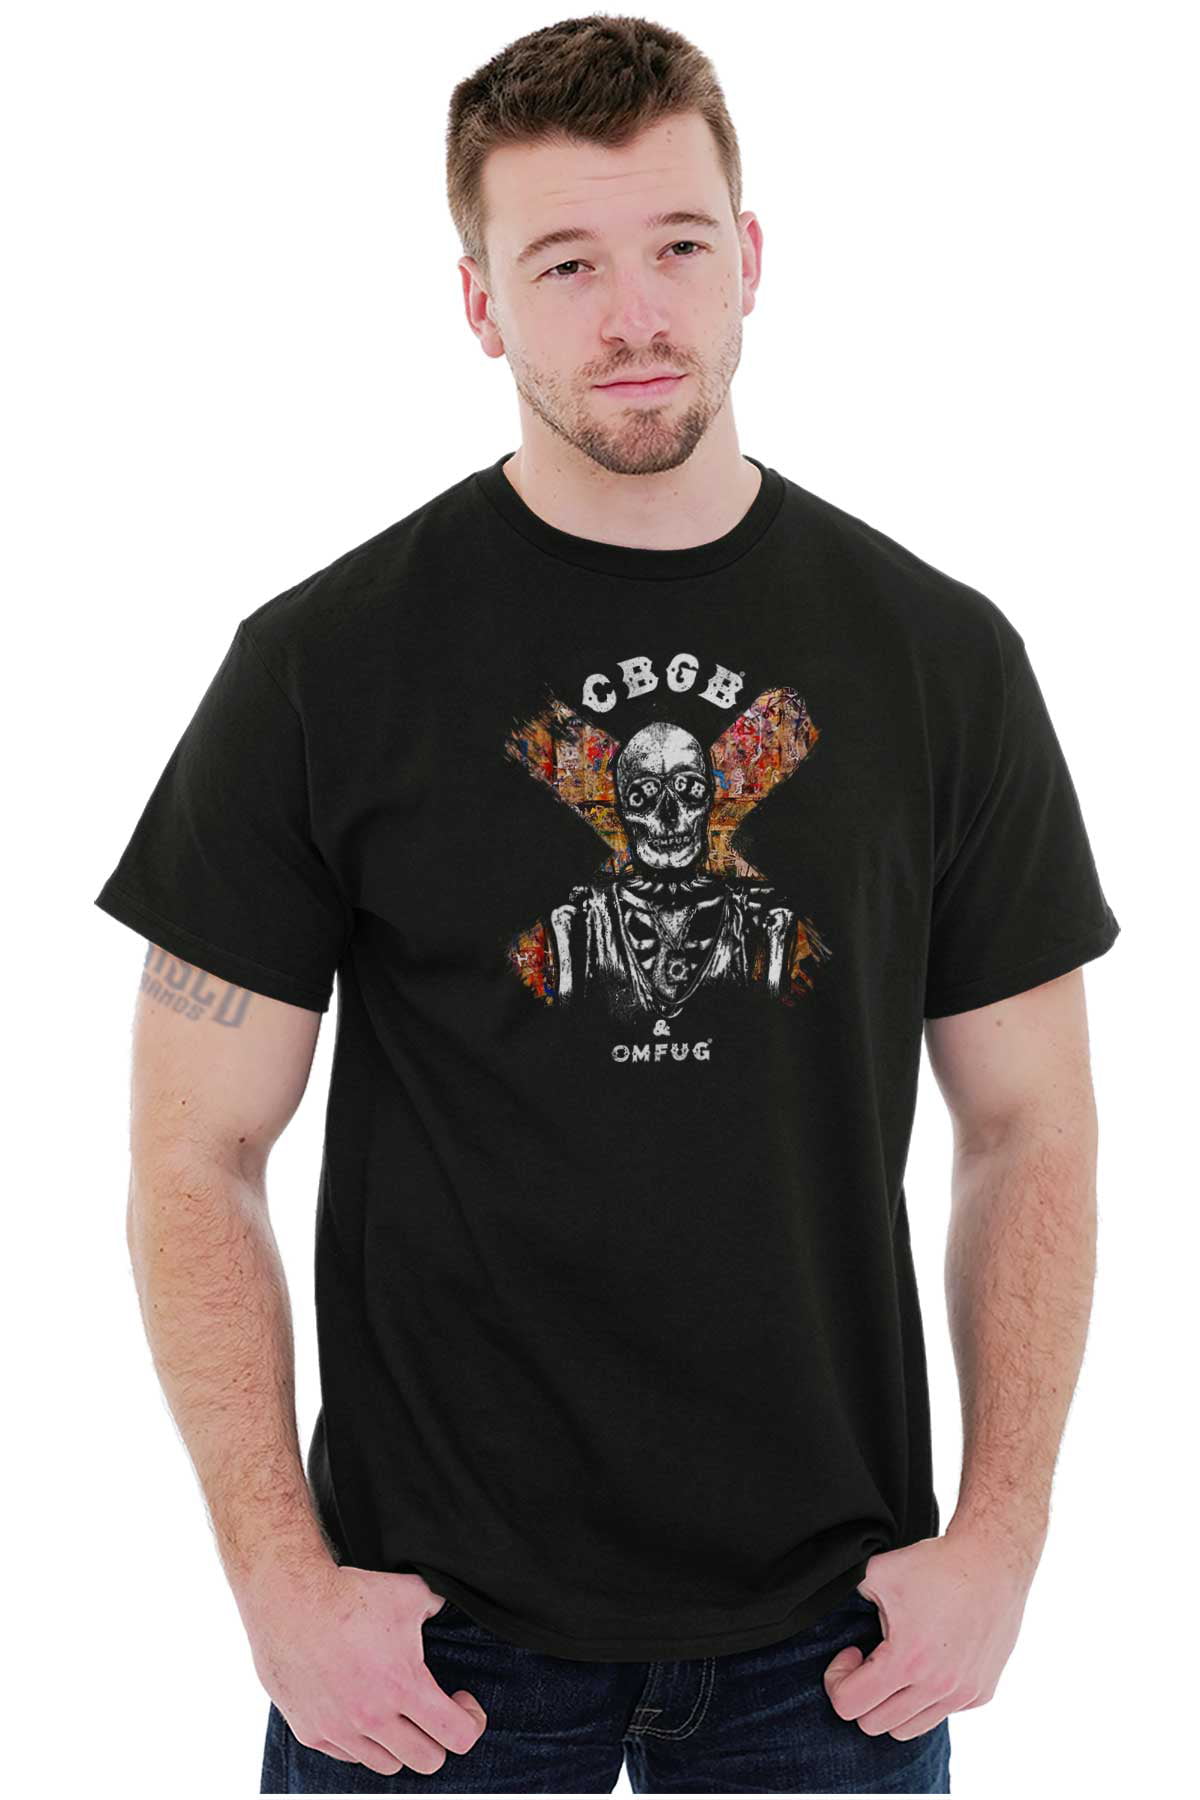 CBGB Forever Skulls Romance Punk Love Graphic T Shirt Men or Women ...